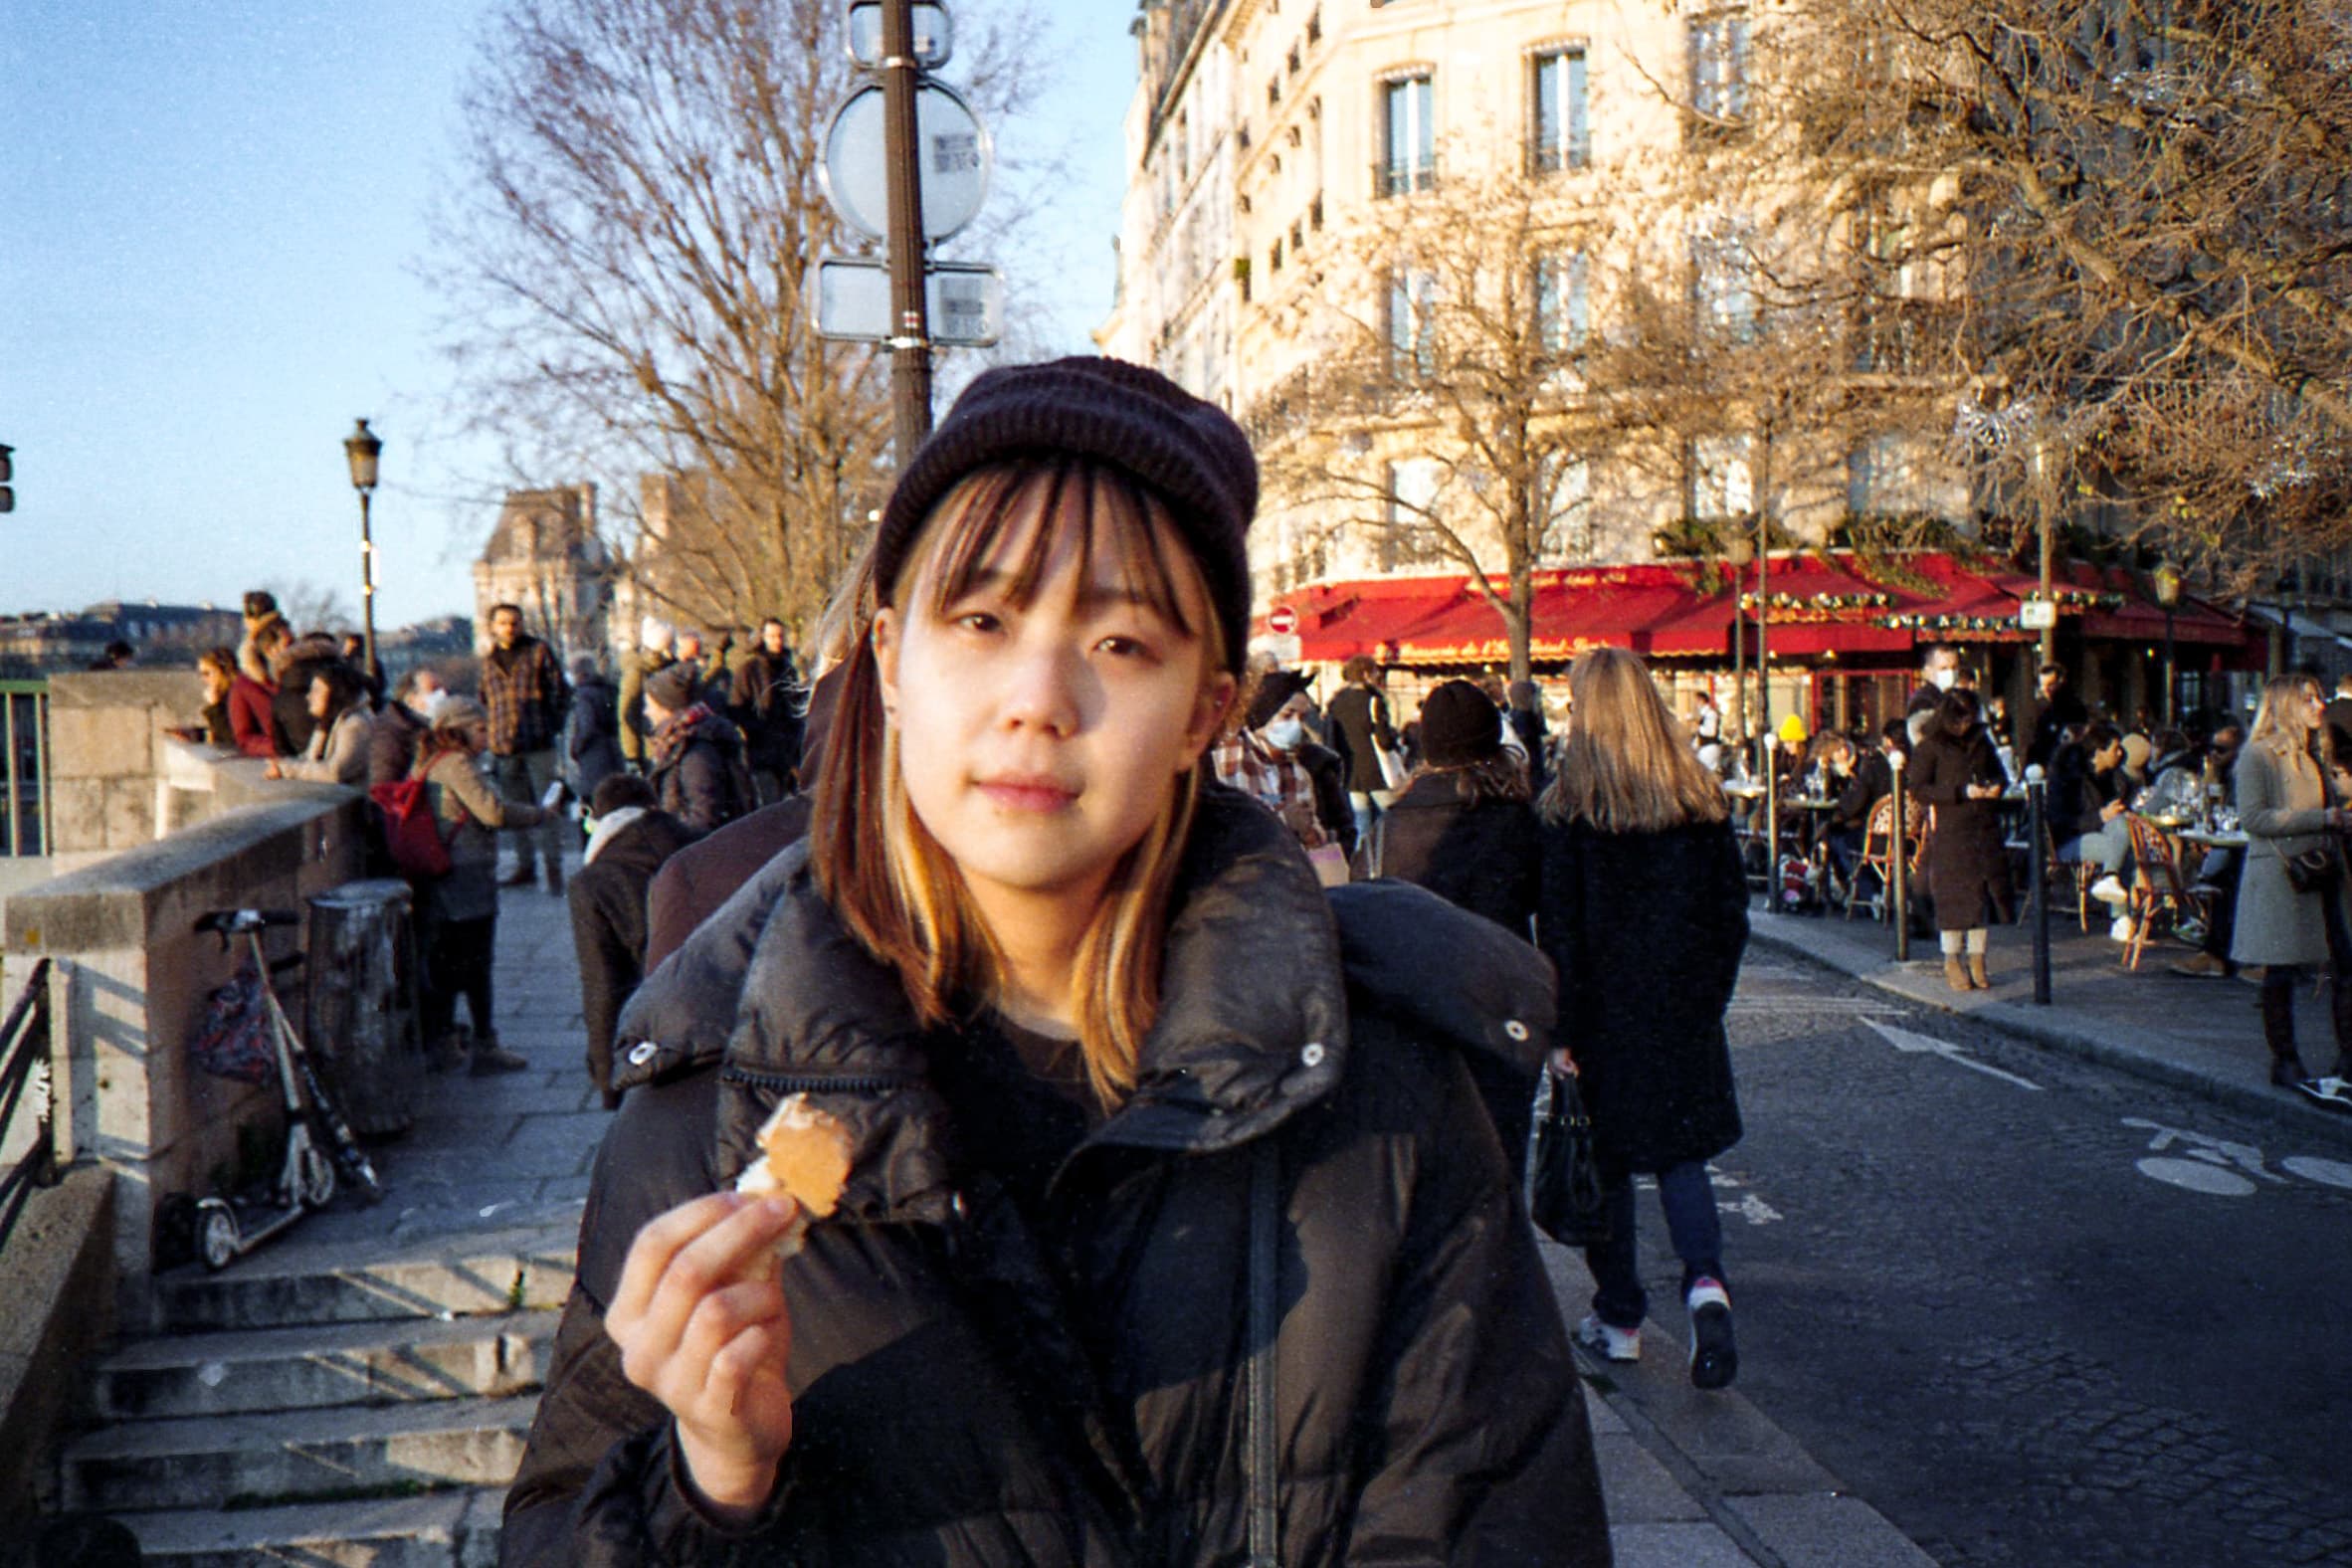 Paris, me eating baguette by the Seine.